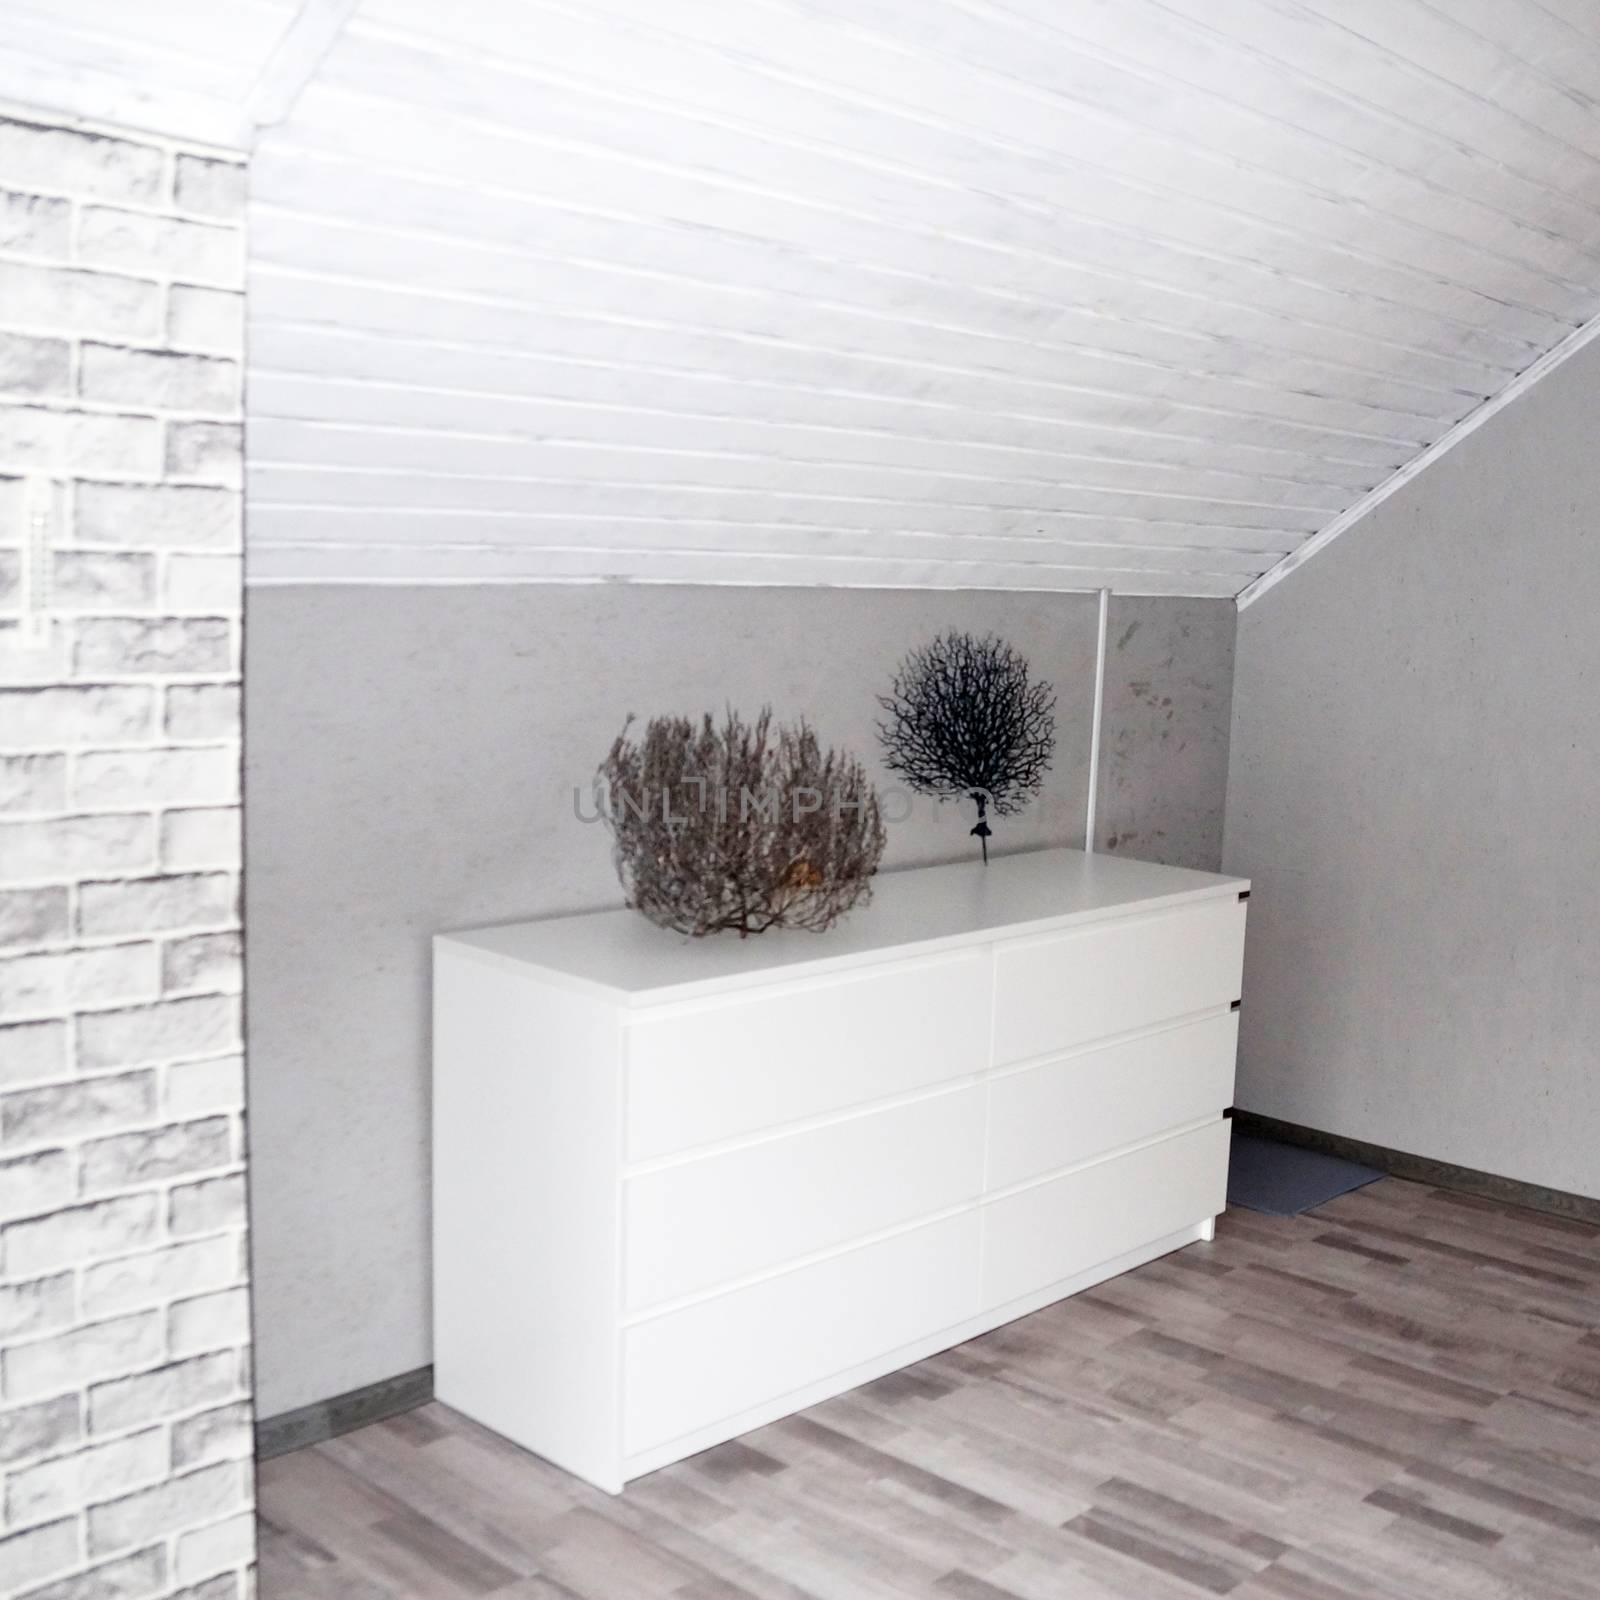 attic interior in white and gray tones by Annado